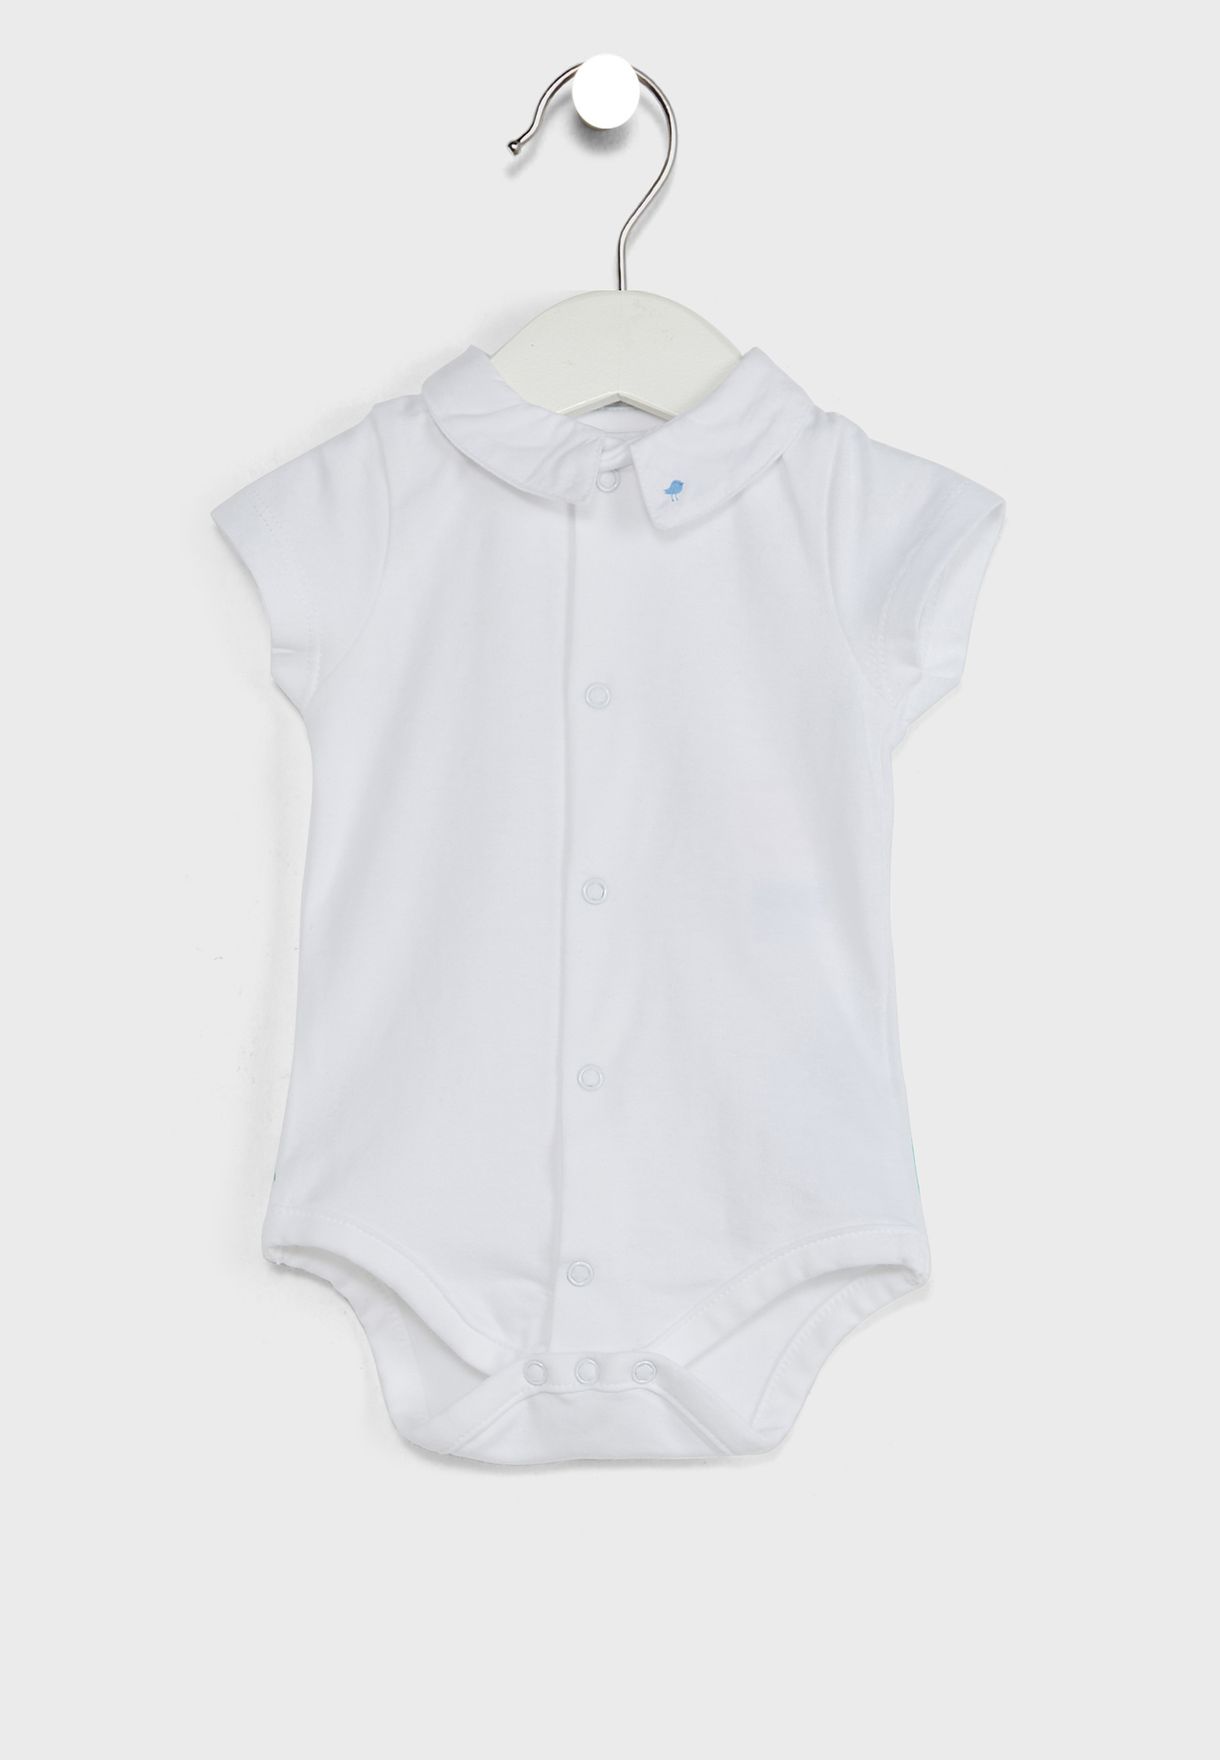 Infant Front Snap Button Fastener Bodysuit